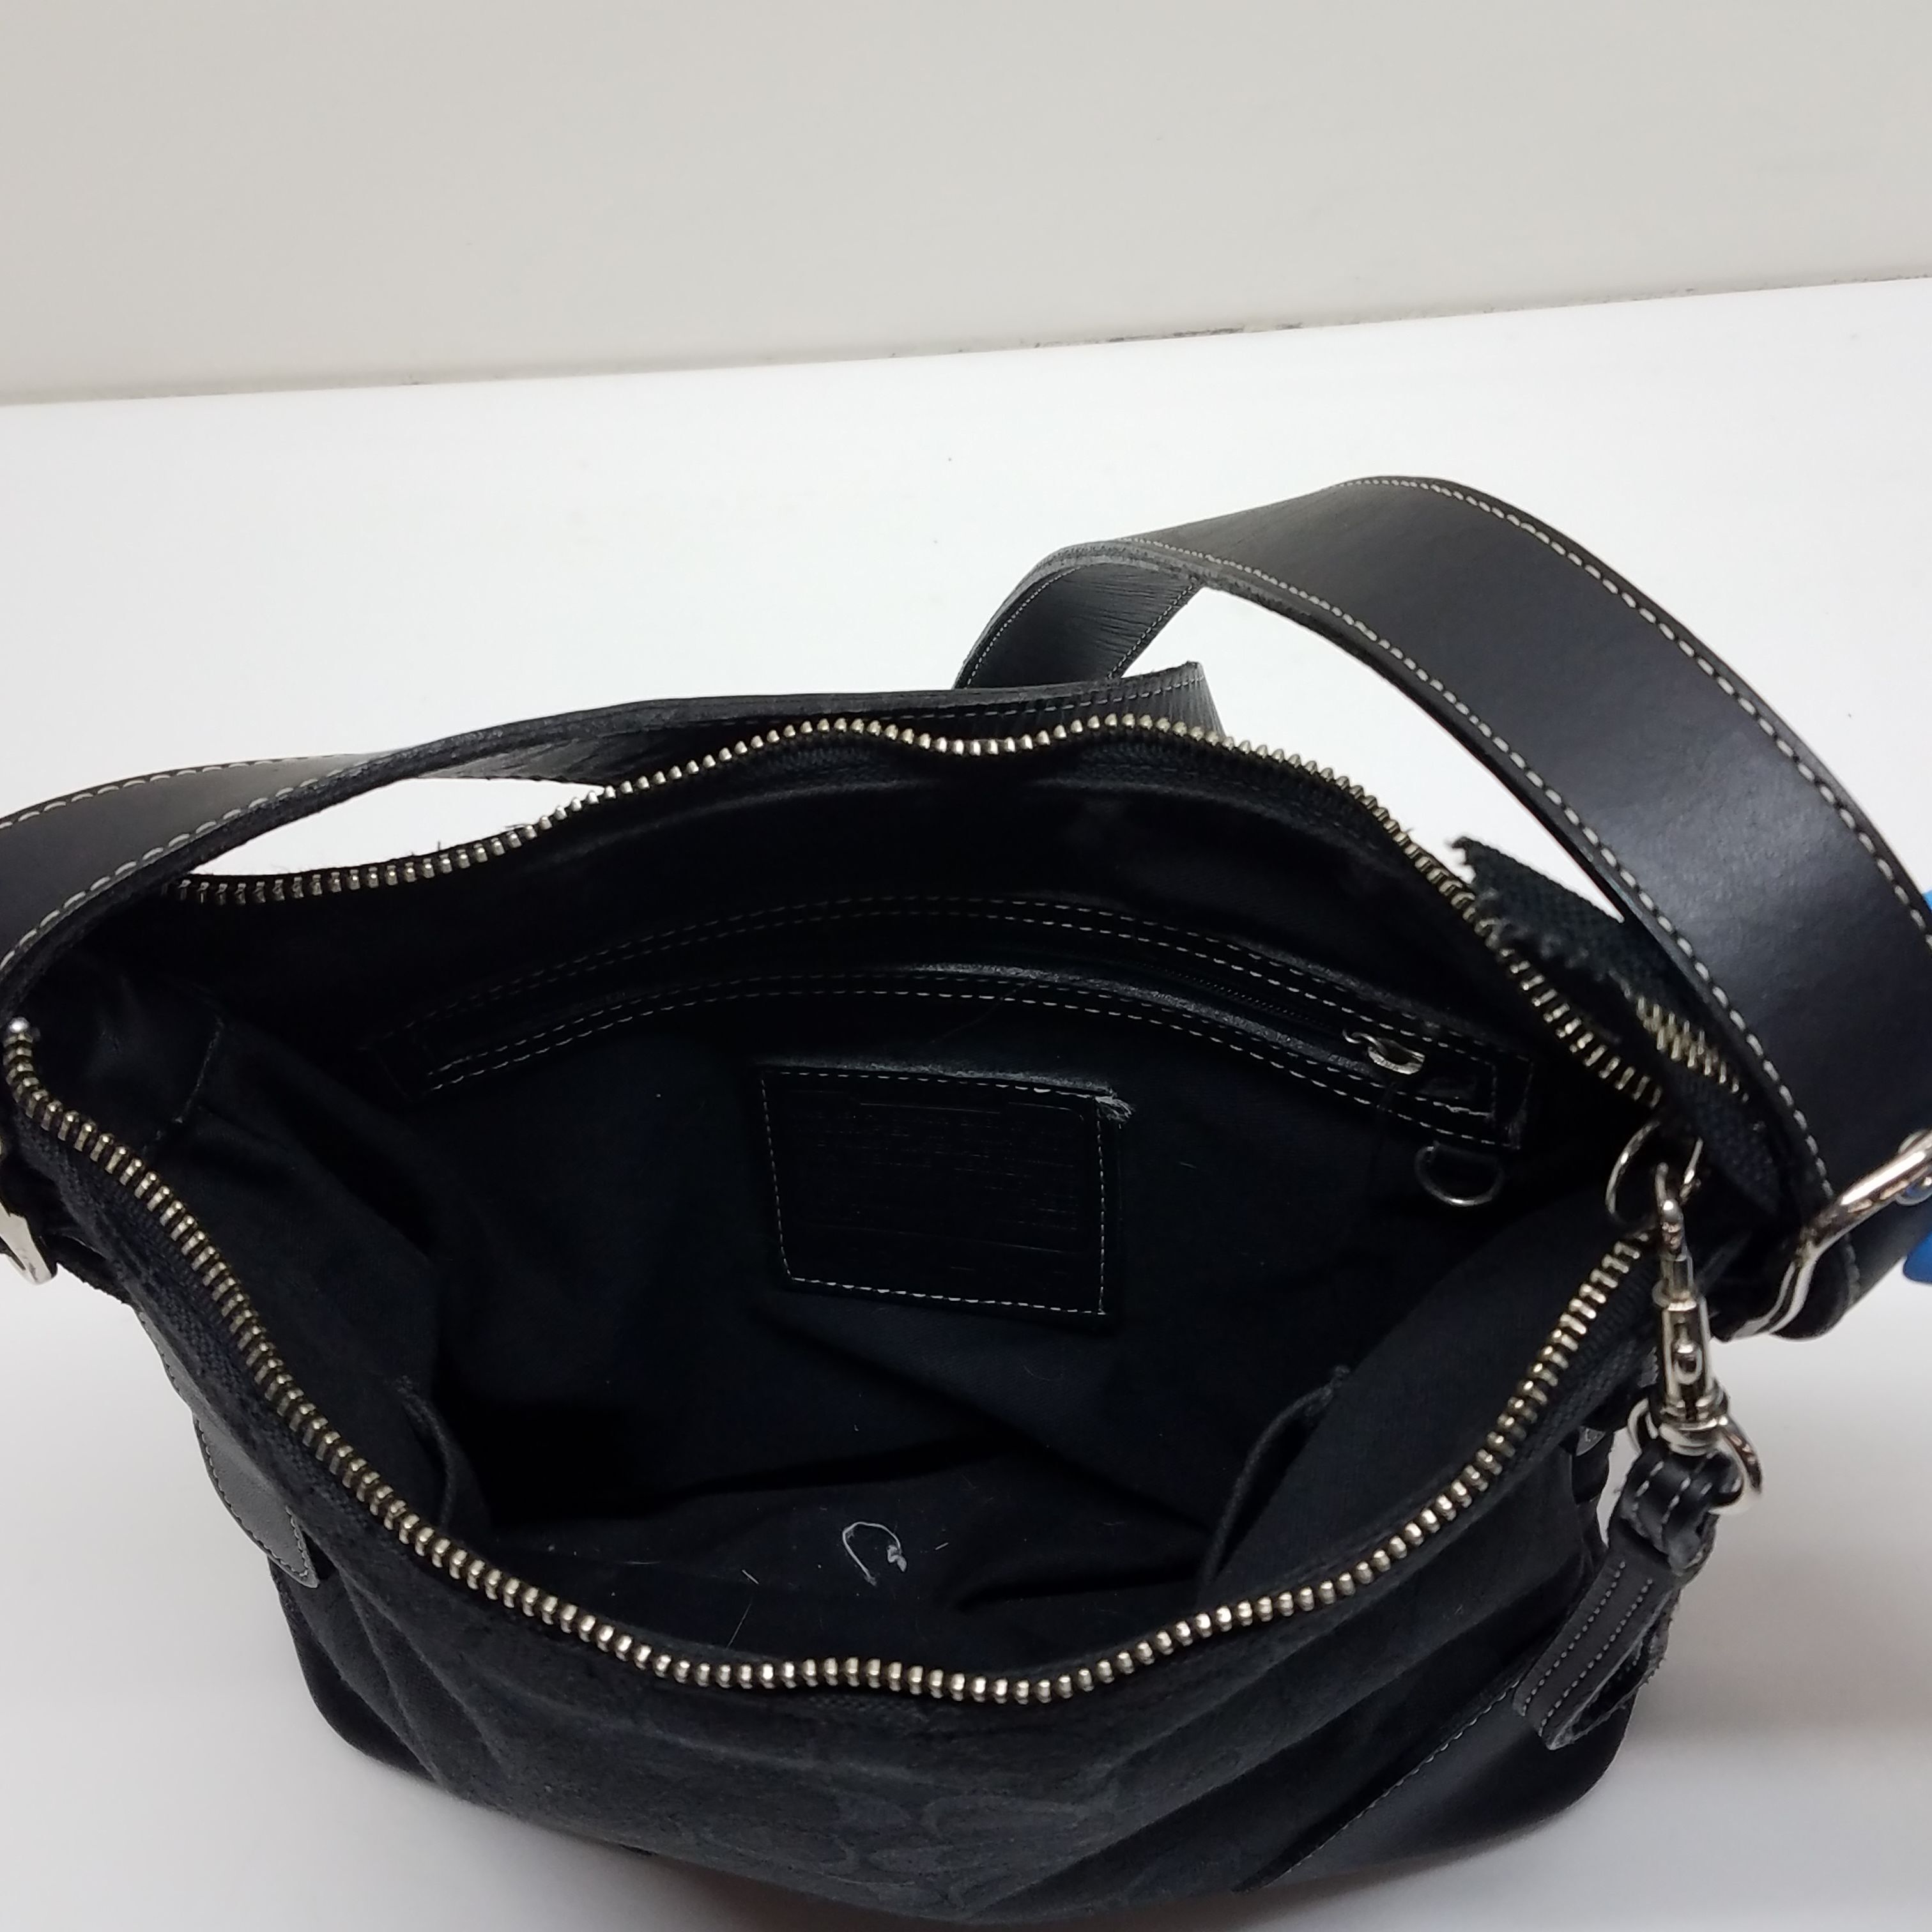 Vintage Beau Sac Handbag in Black Fabric. Antique Purse With - Etsy |  Vintage evening bags, Fabric handbags, Handbag